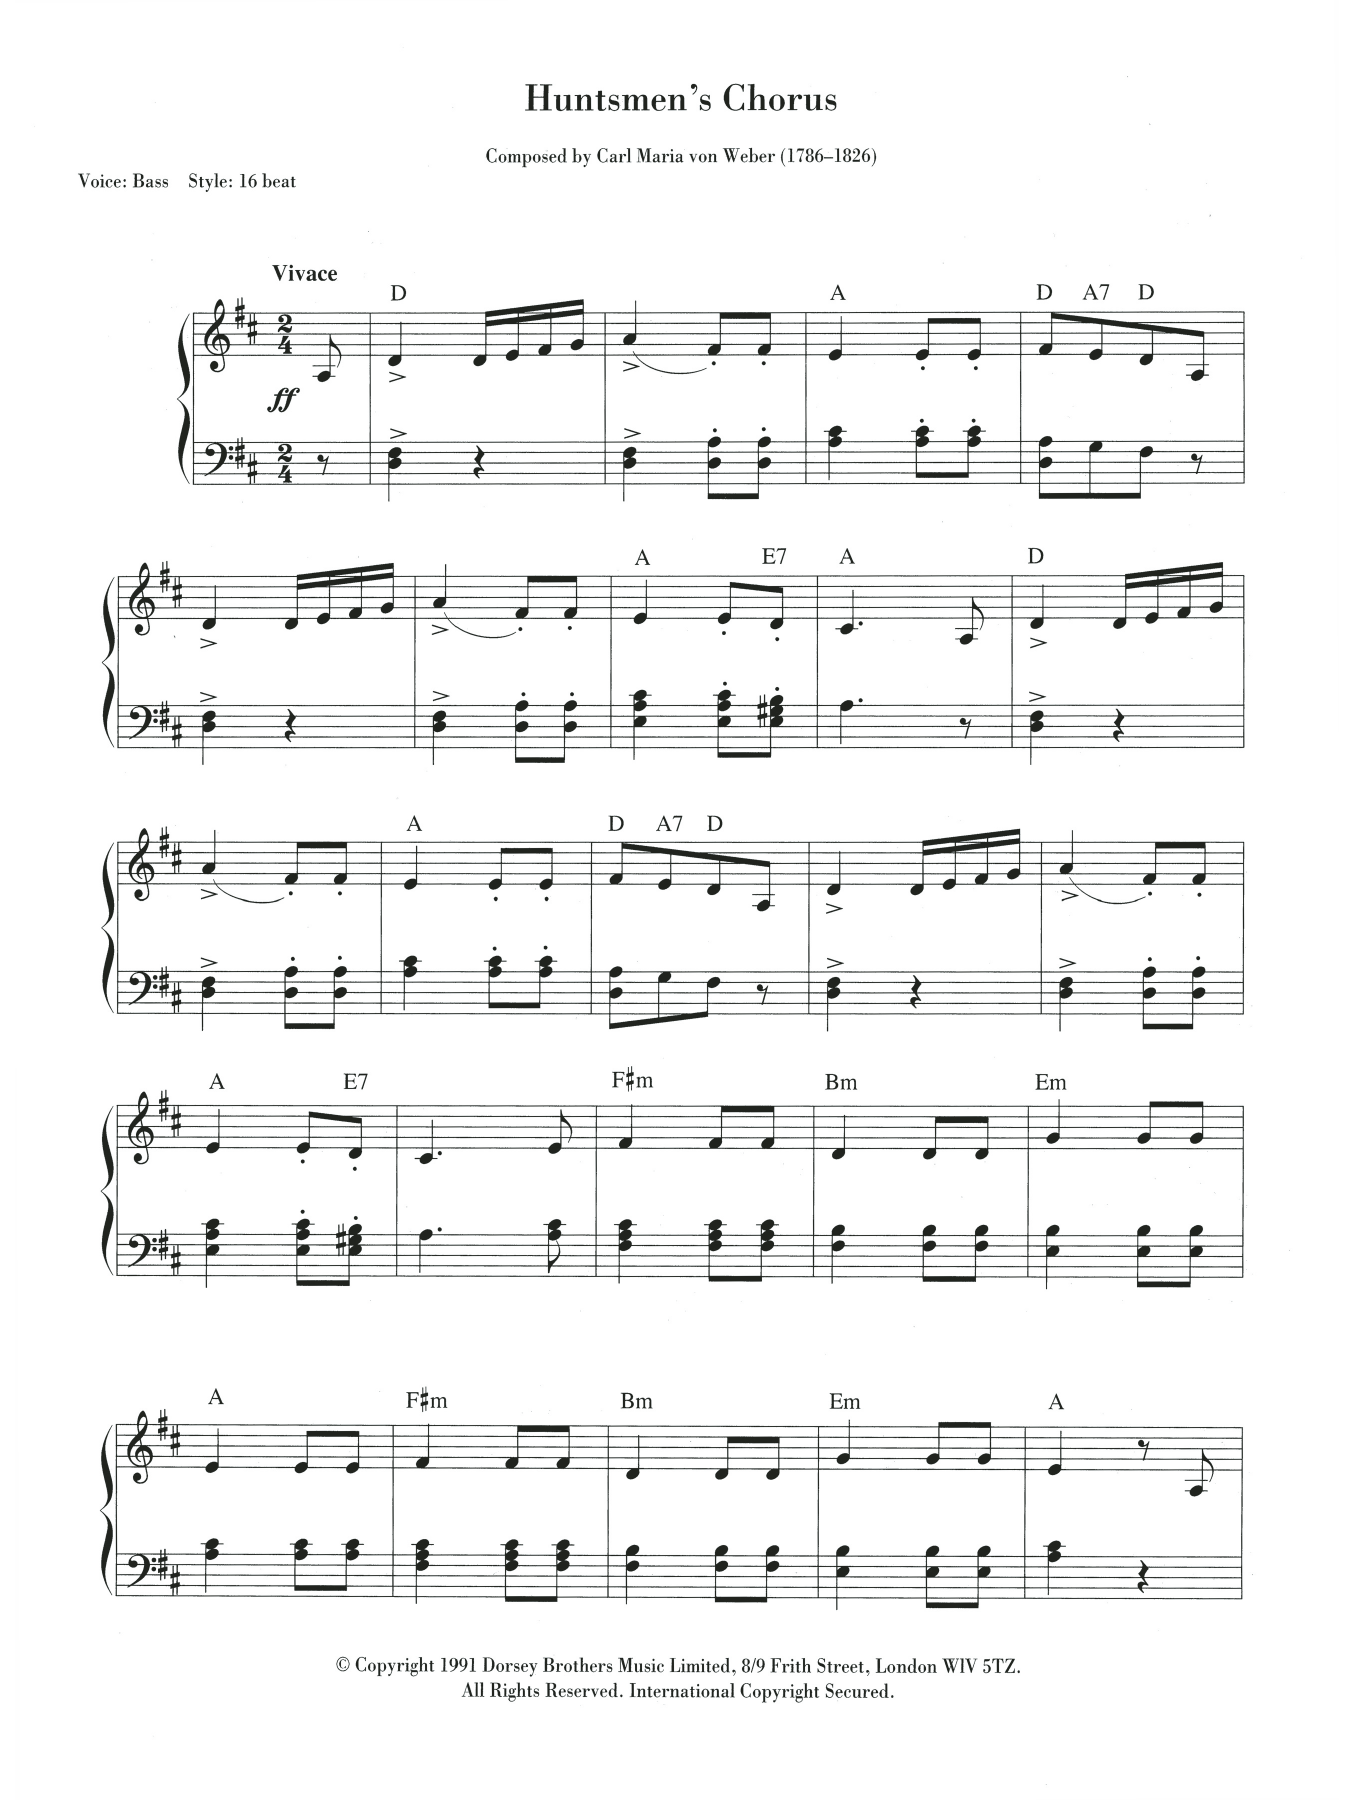 Carl Maria von Weber The Huntsmen's Chorus Sheet Music Notes & Chords for Keyboard - Download or Print PDF